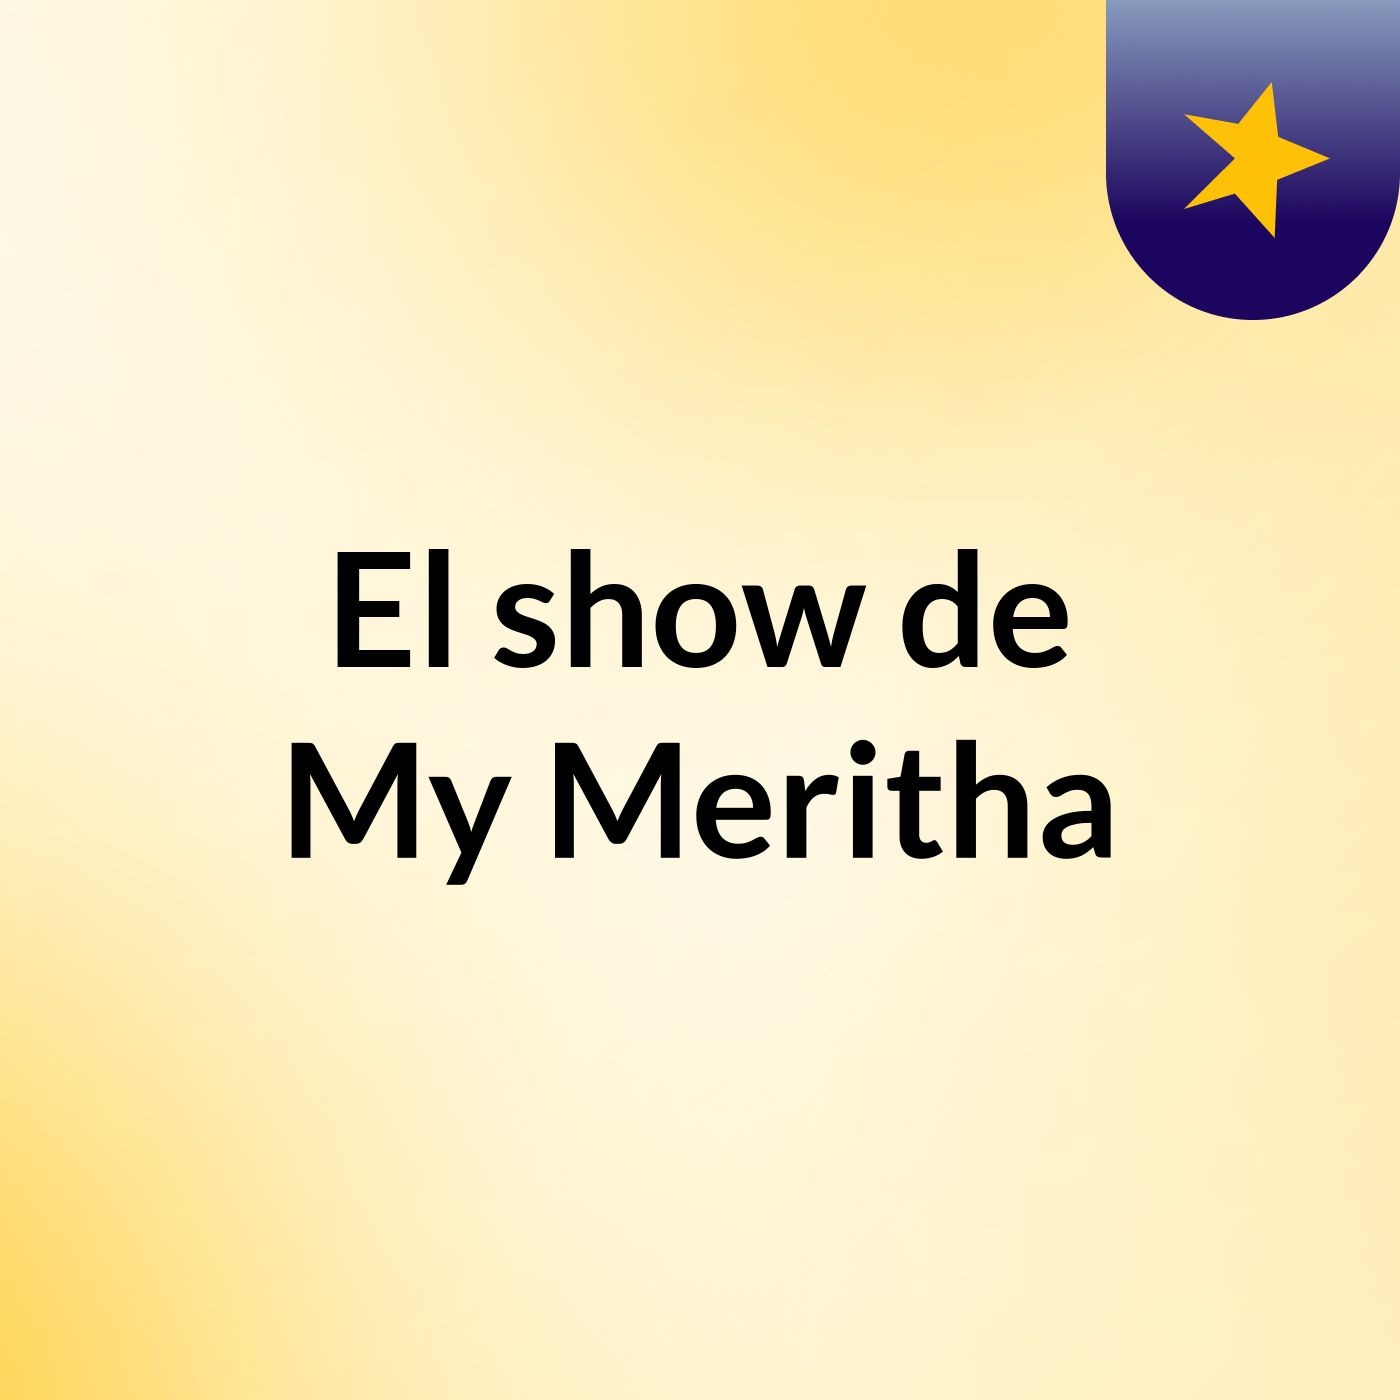 El show de My Meritha